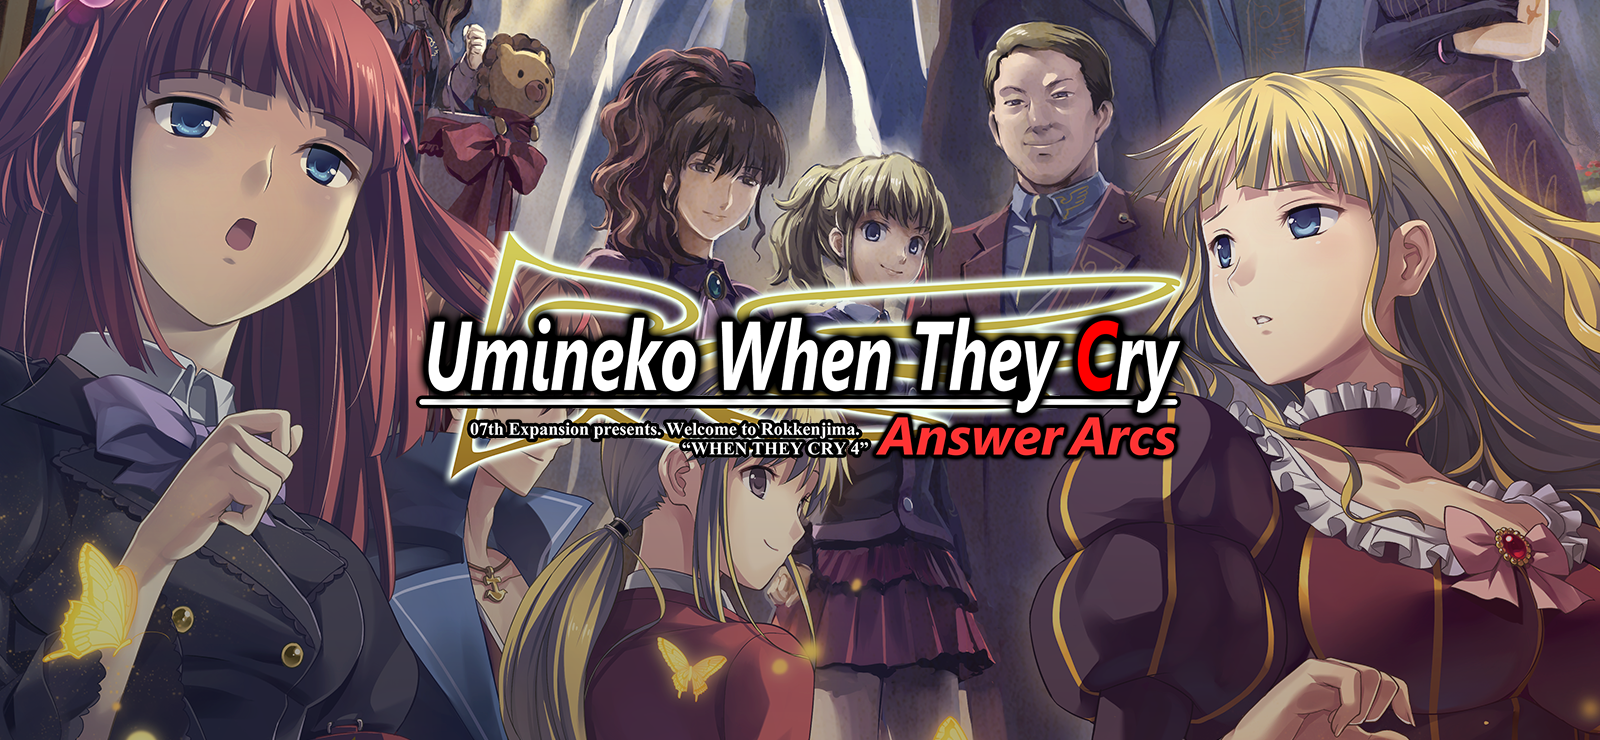 Umineko When They Cry - Answer Arcs